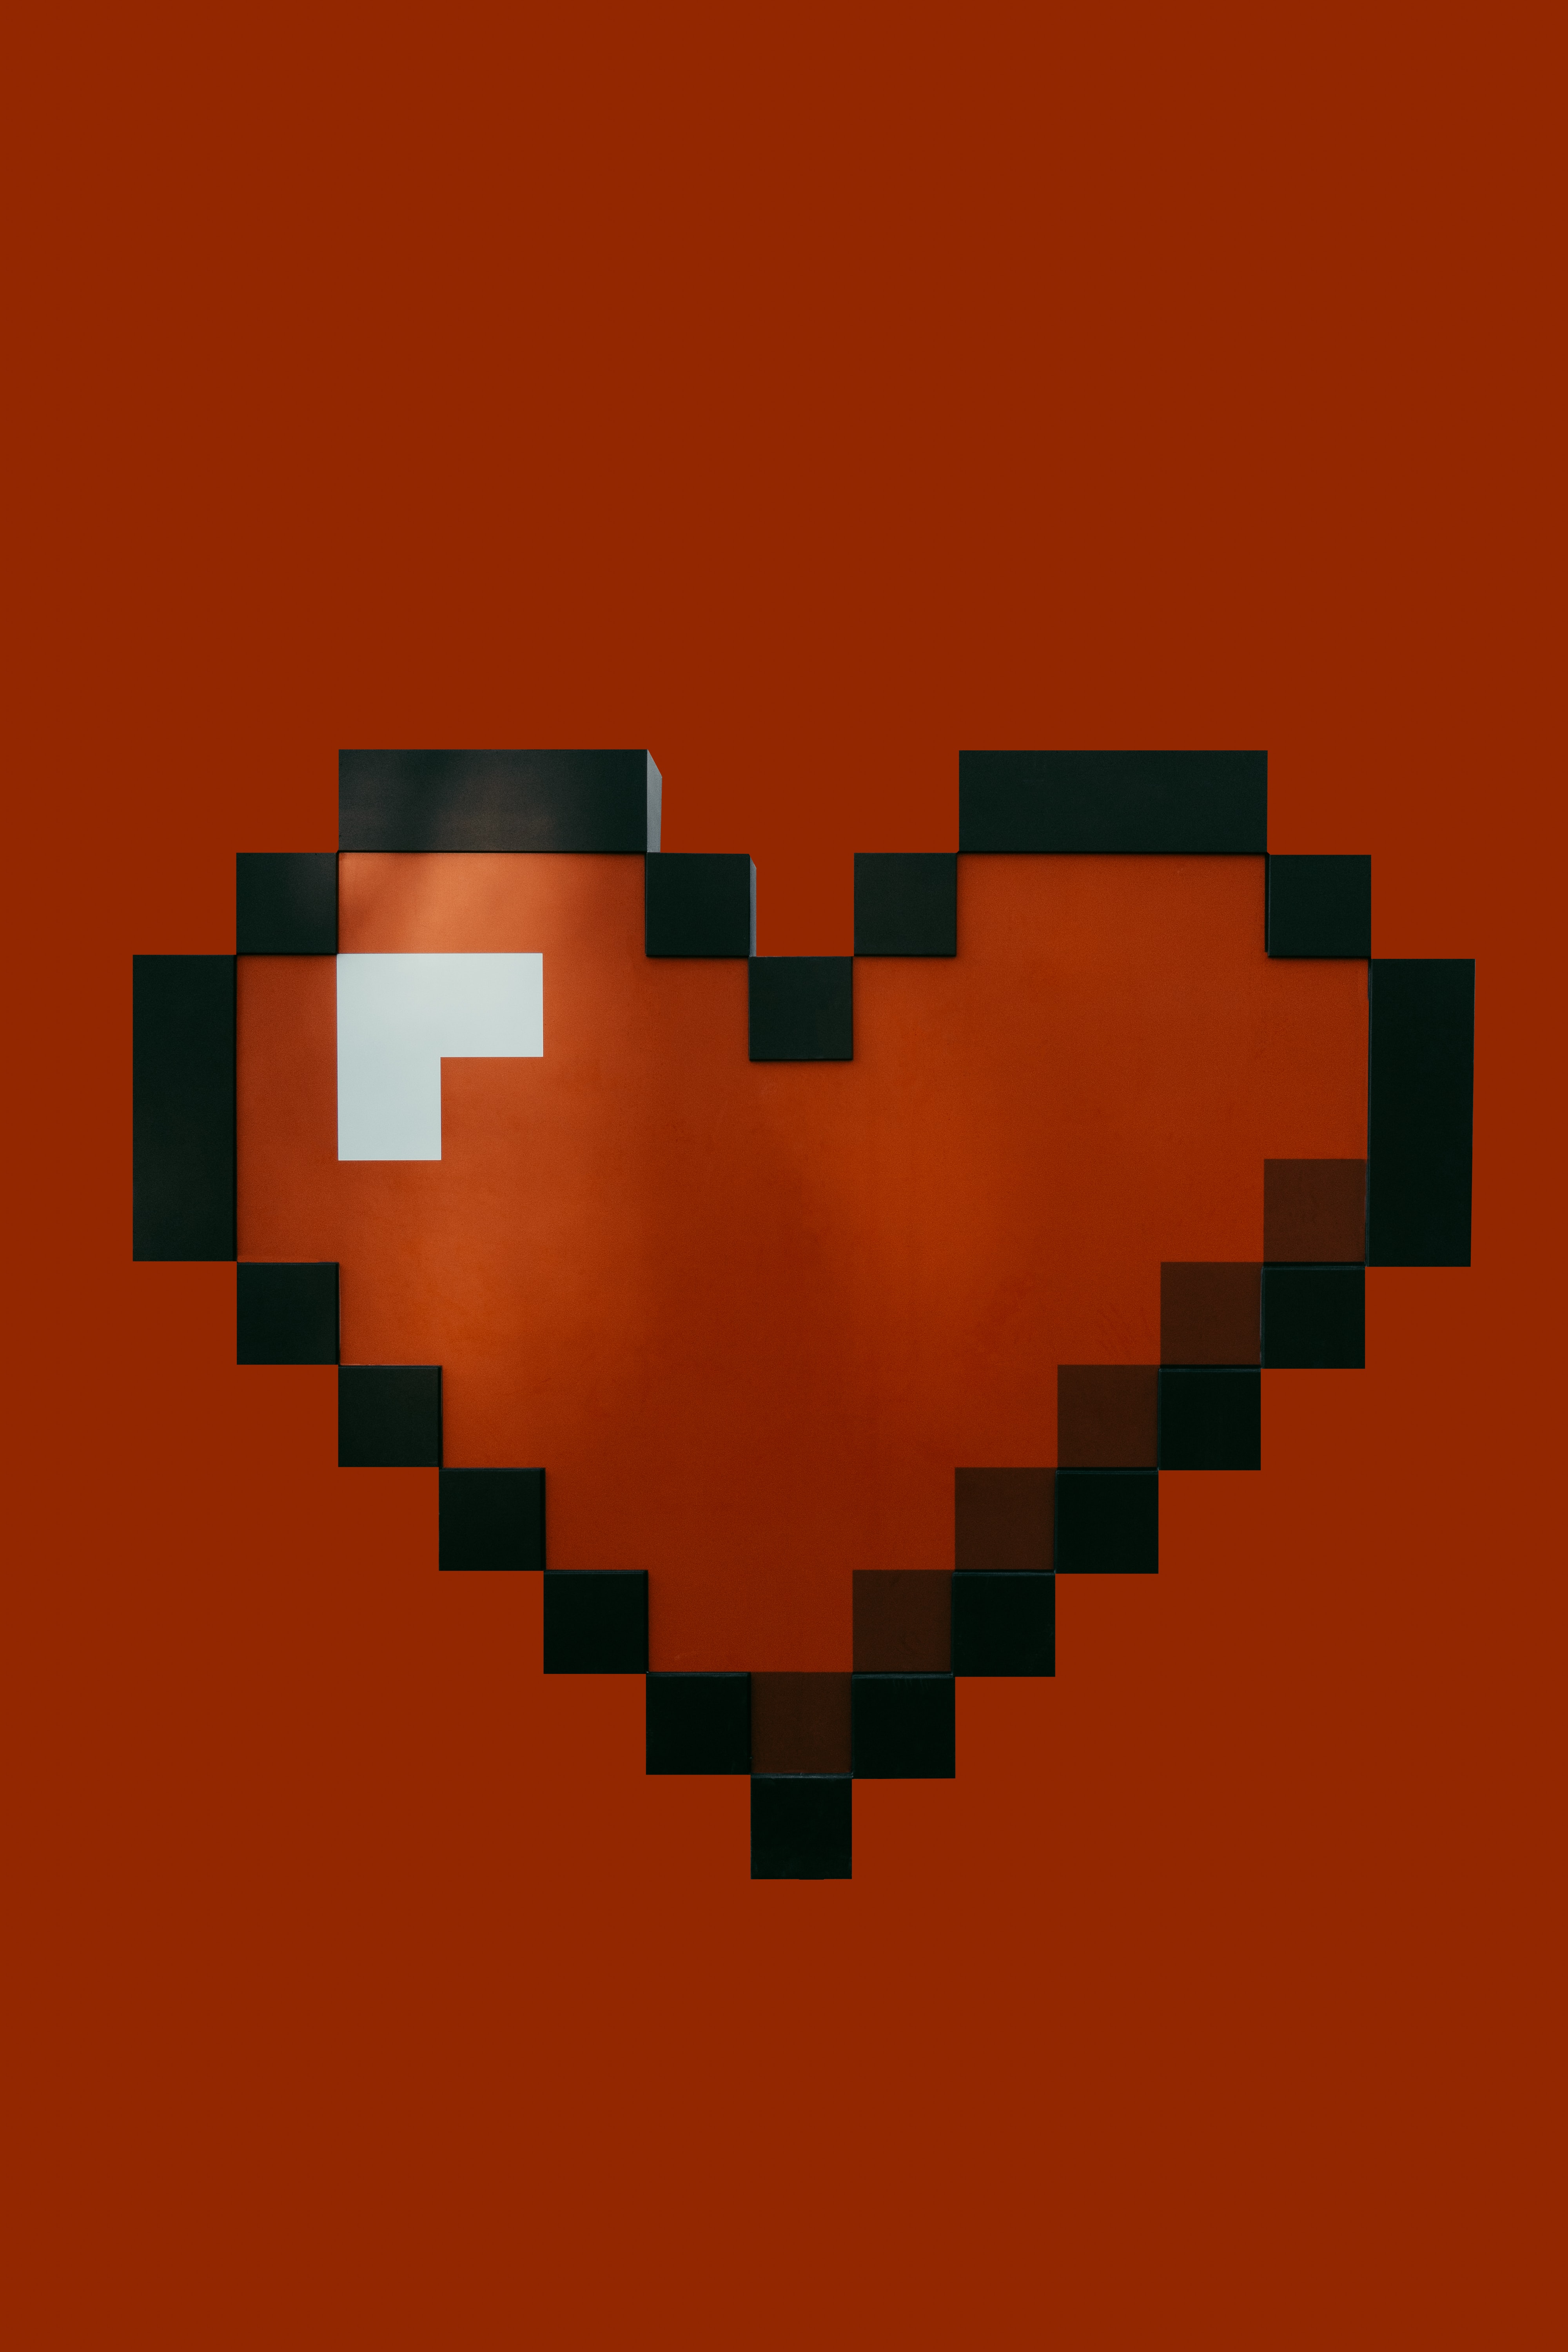 pixel art heart